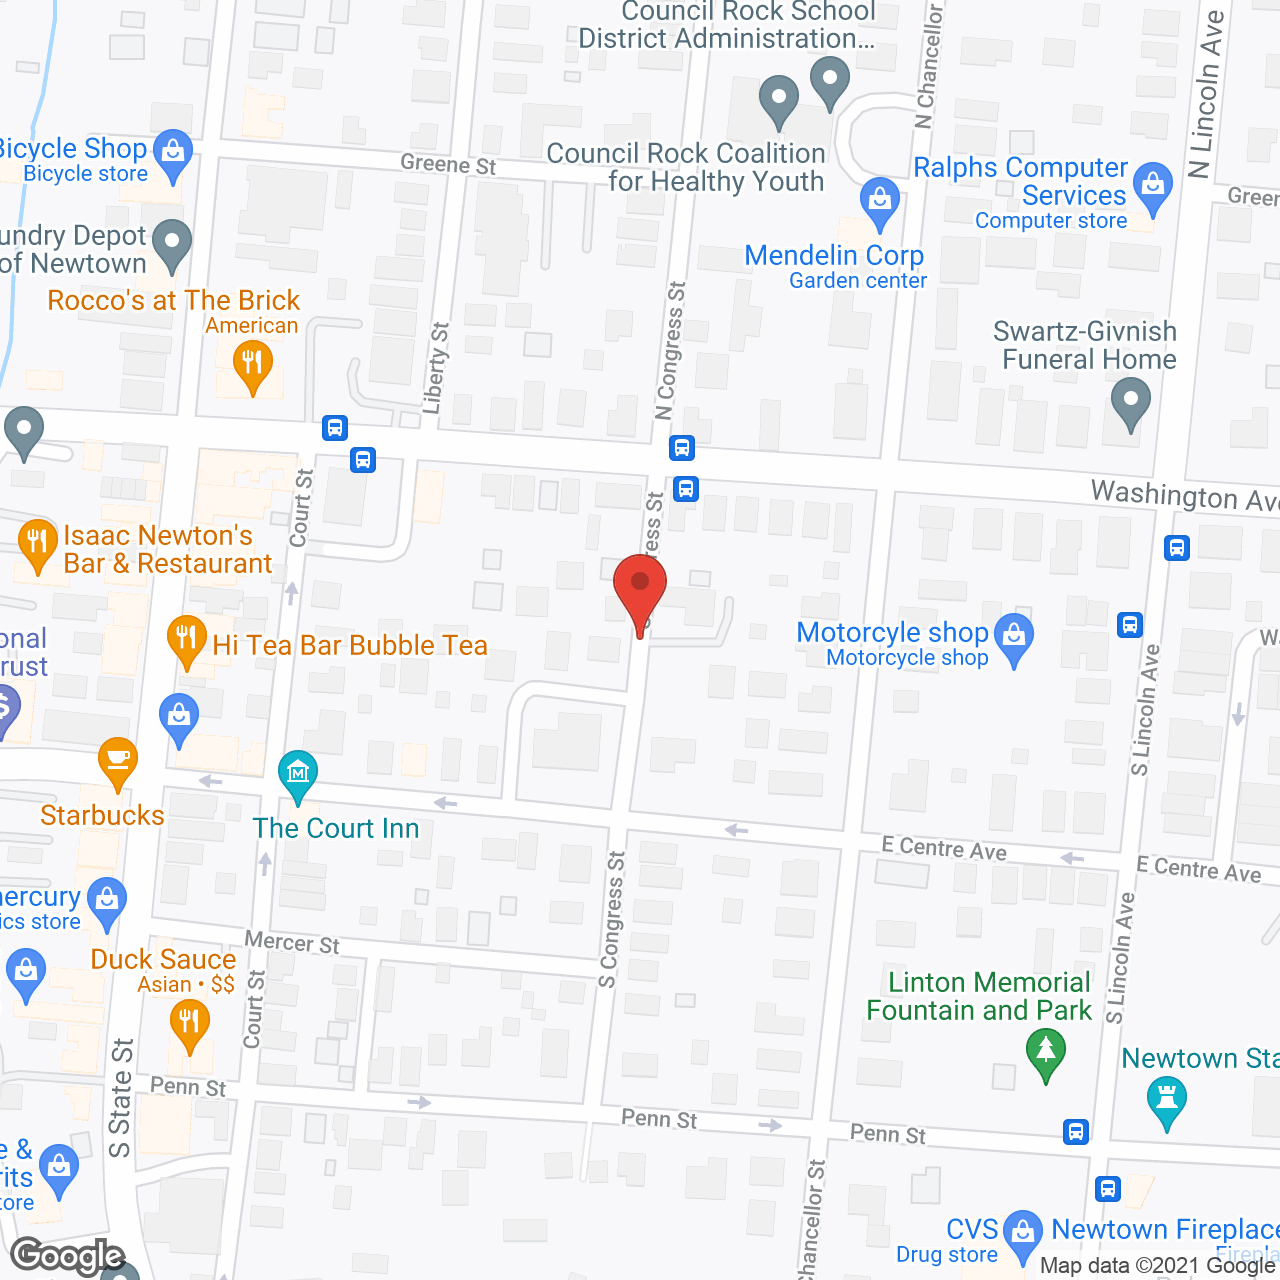 Friends Home & Village in google map